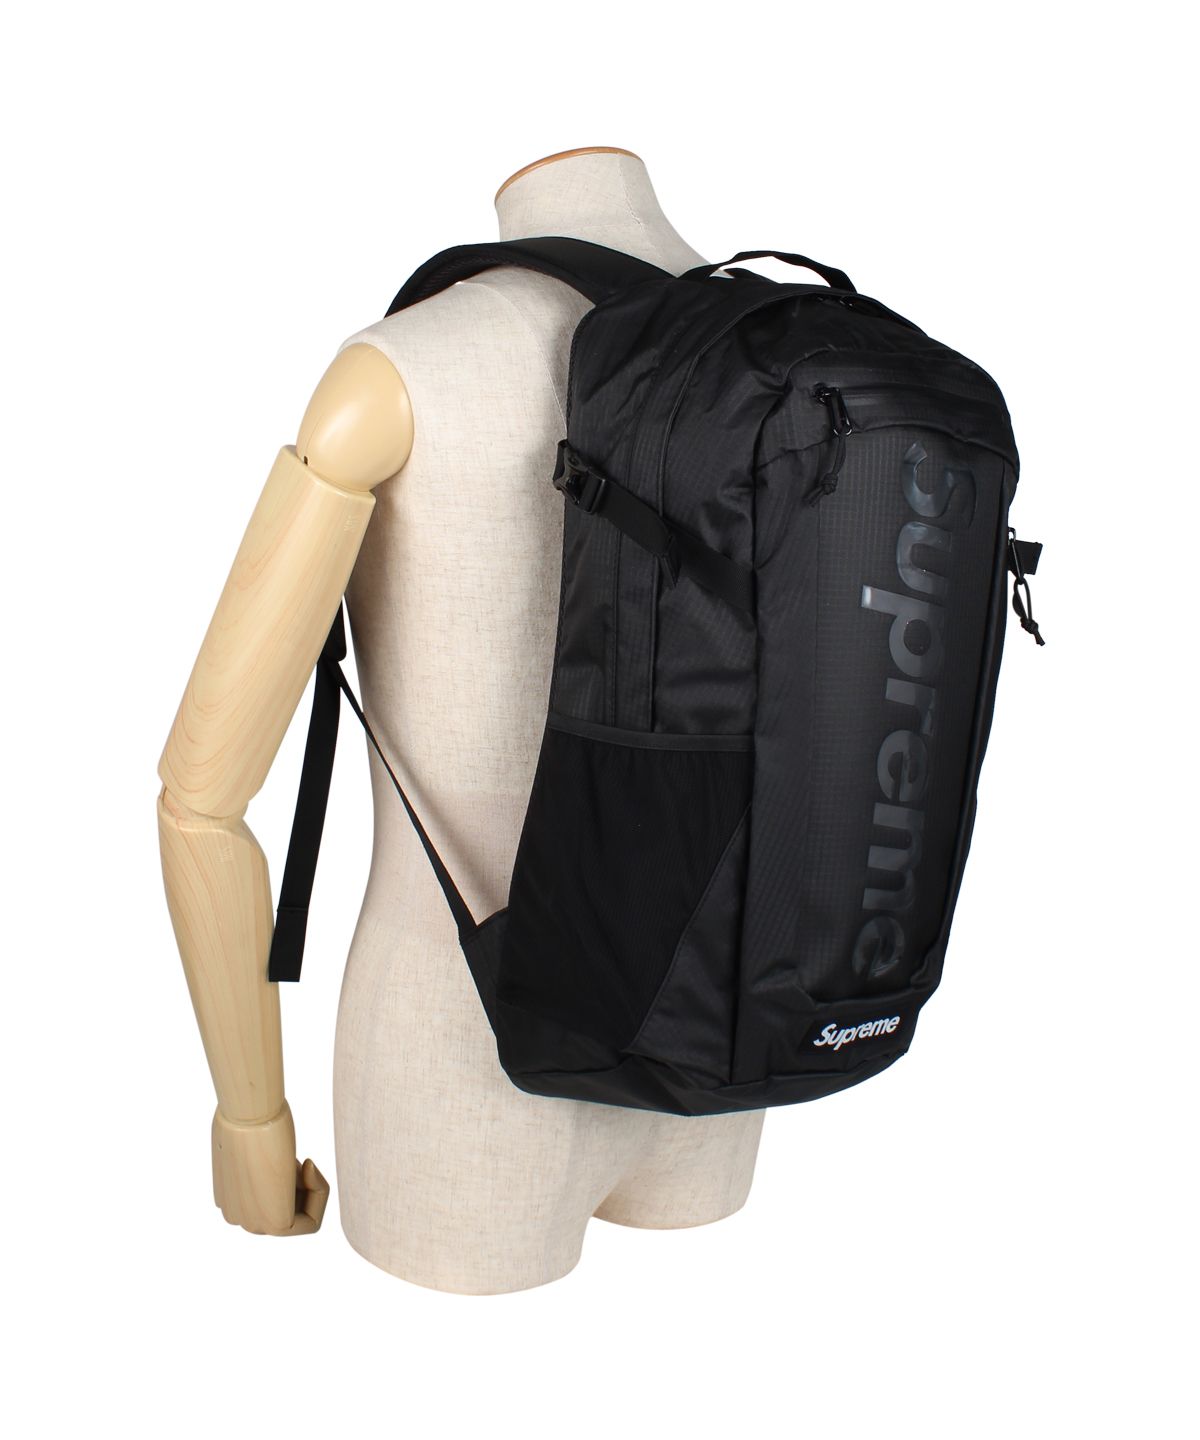 SUPREME Backpack リュック ブラック 黒 メンズ レディース